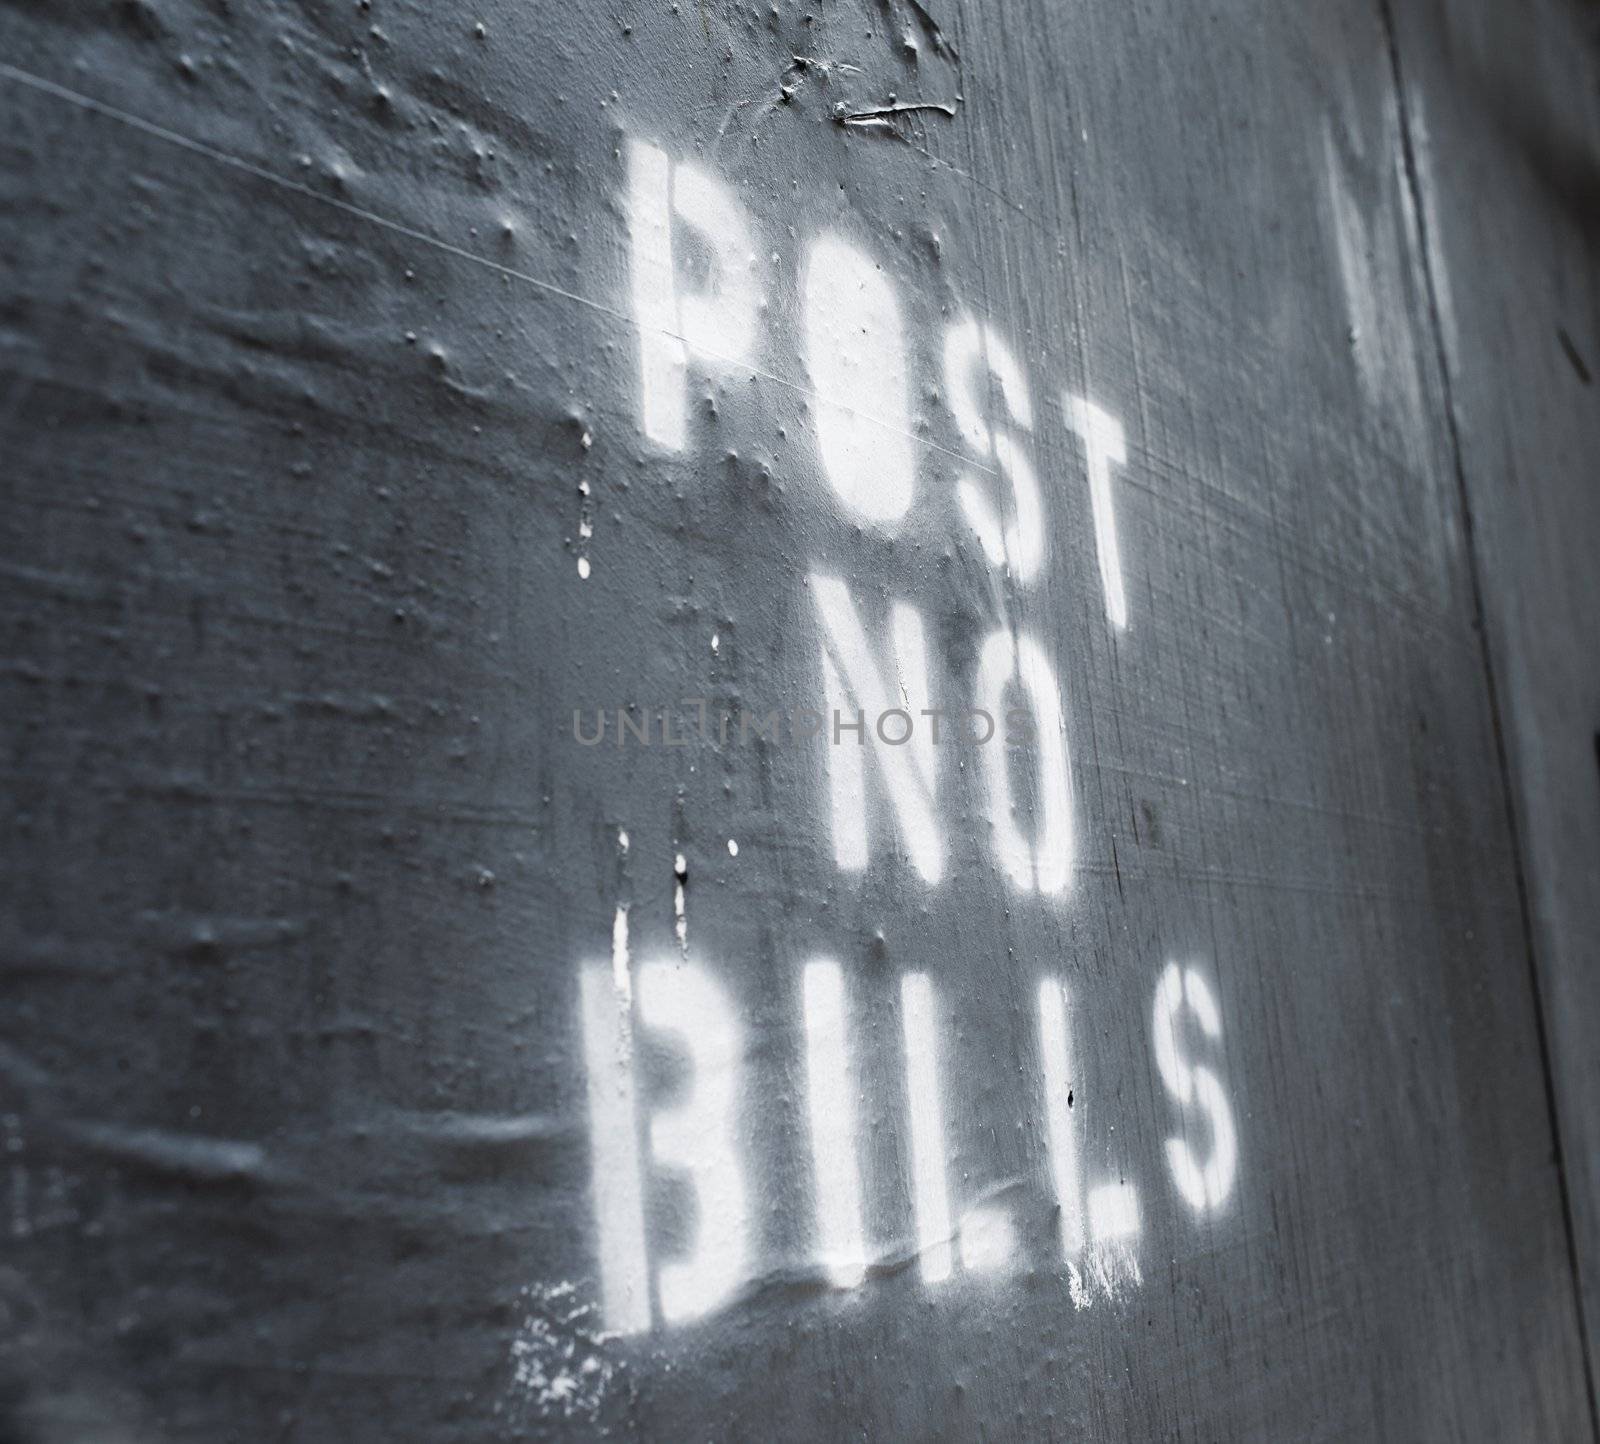 Post No Bills by Stocksnapper